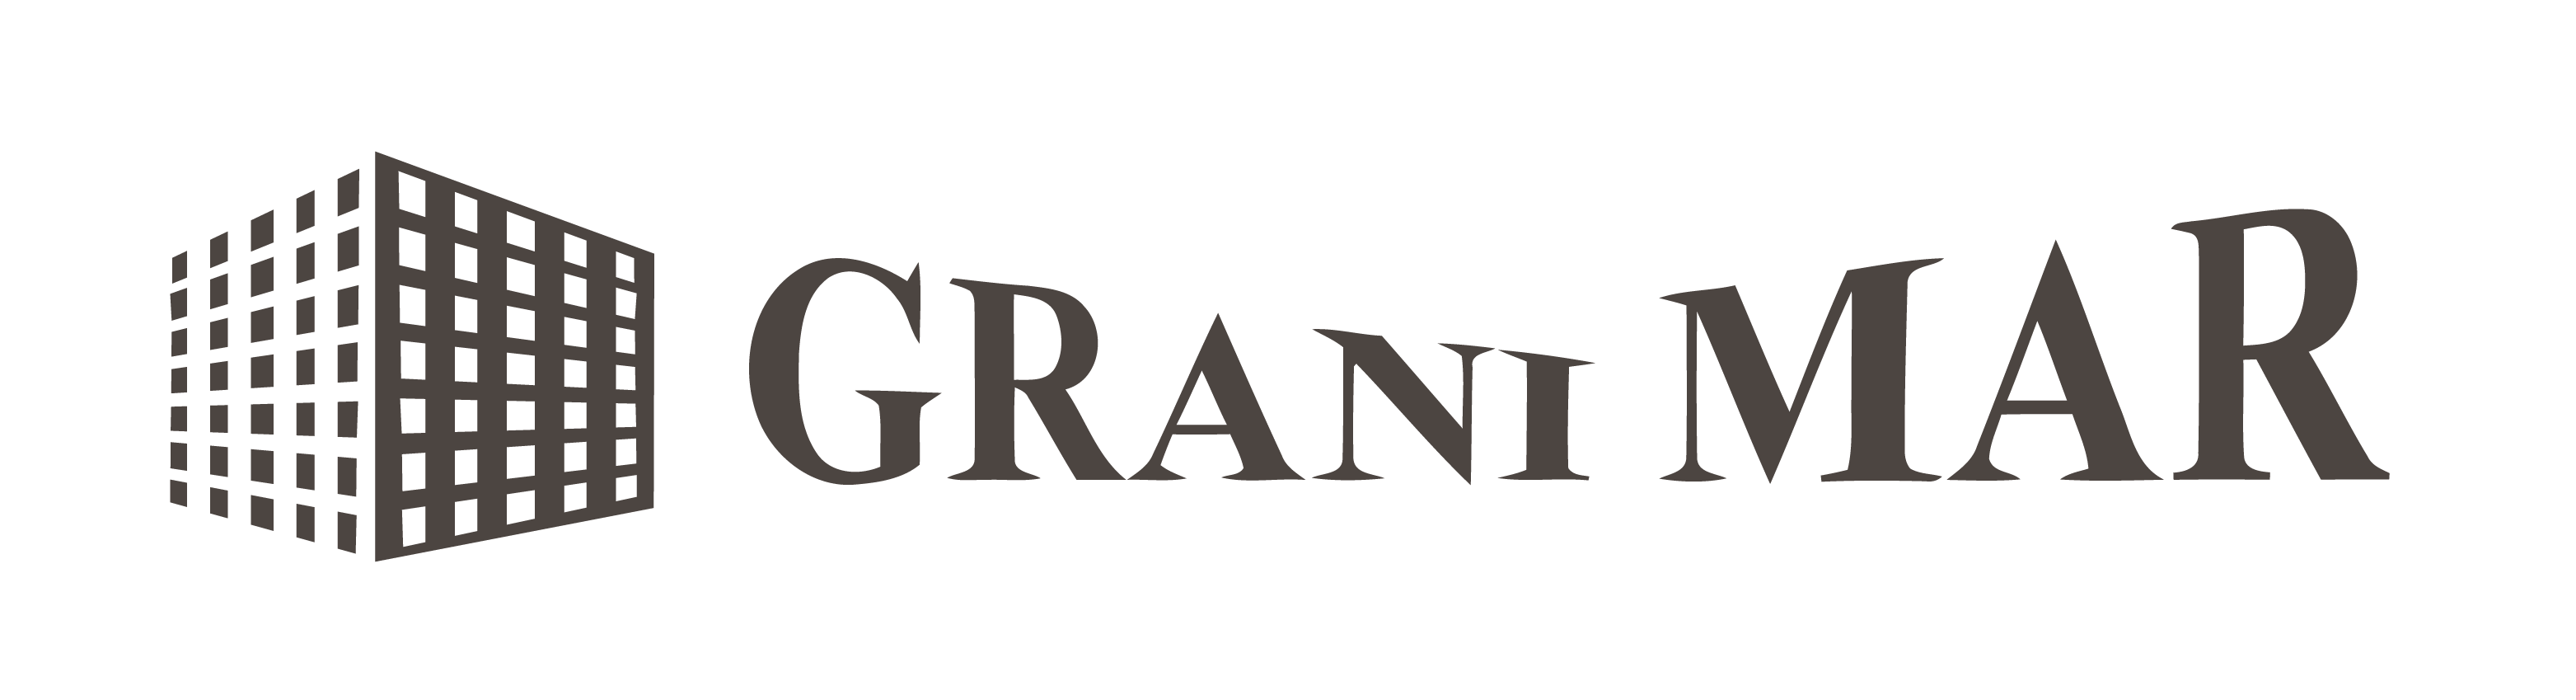 Granimar Logo